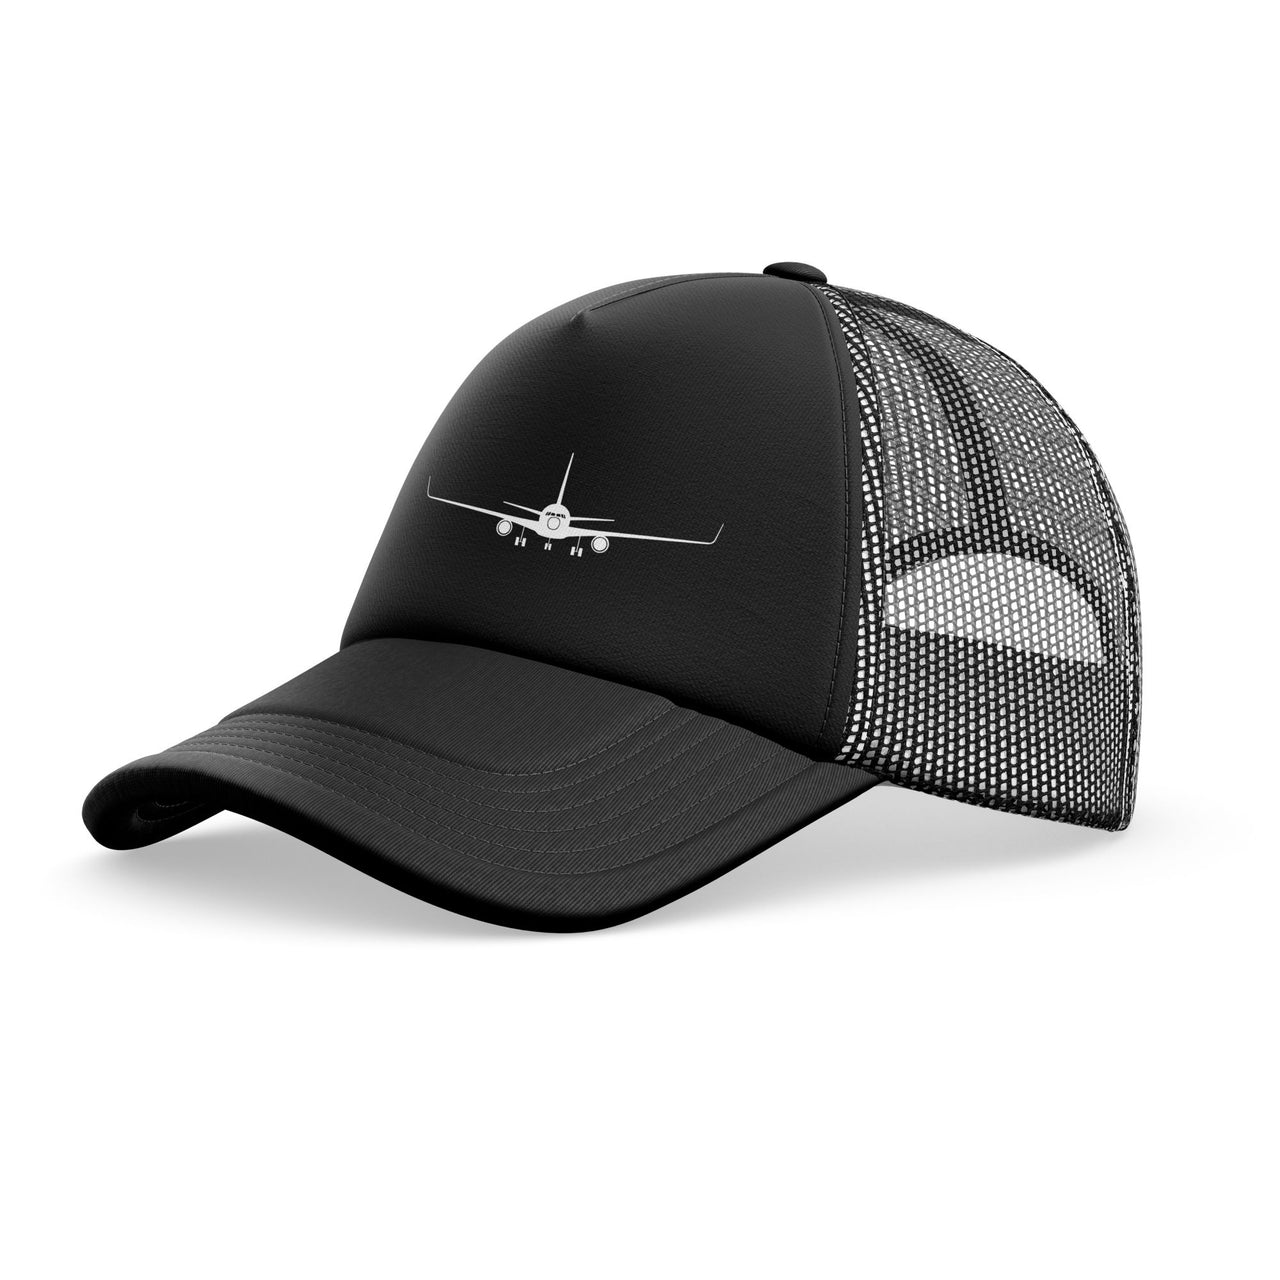 Boeing 767 Silhouette Designed Trucker Caps & Hats